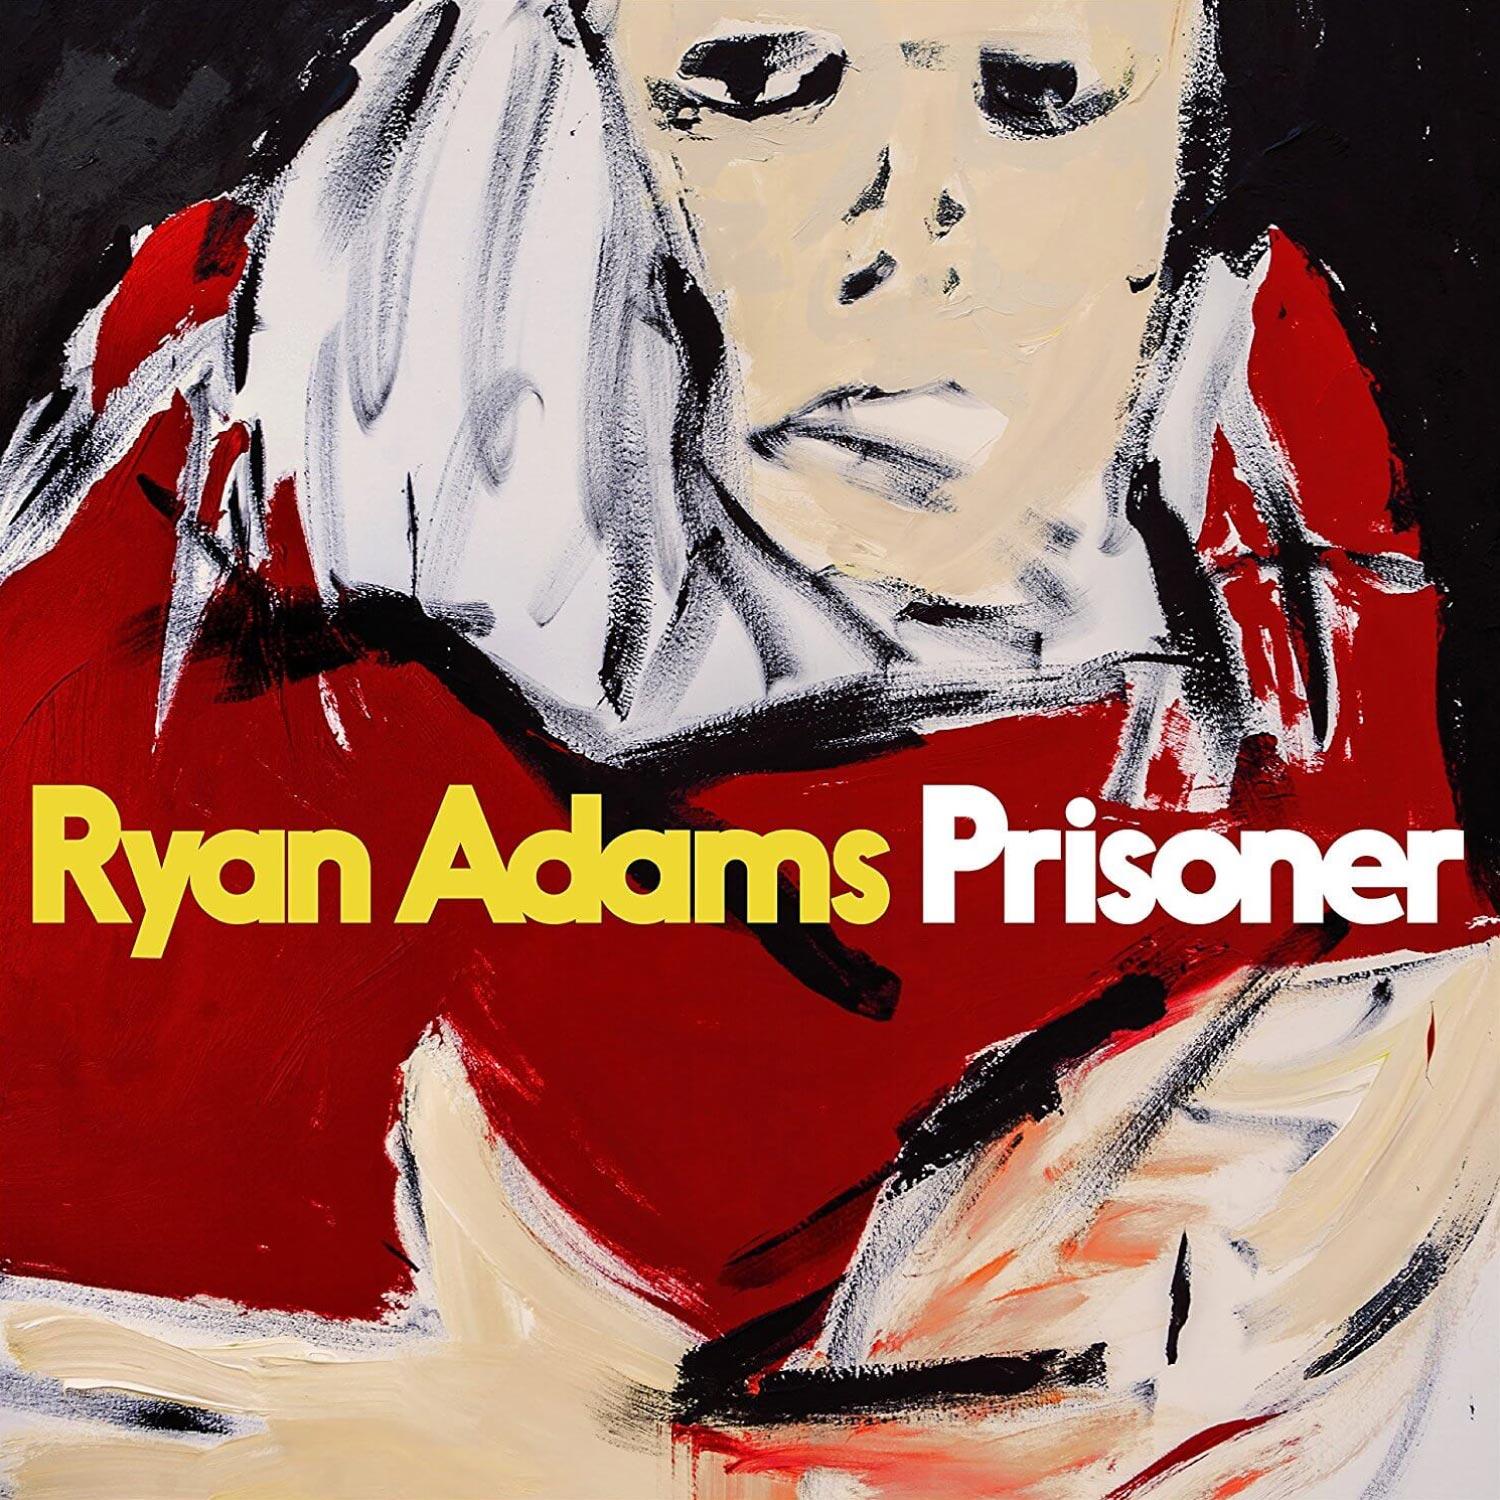 Prisoner by Ryan Adams